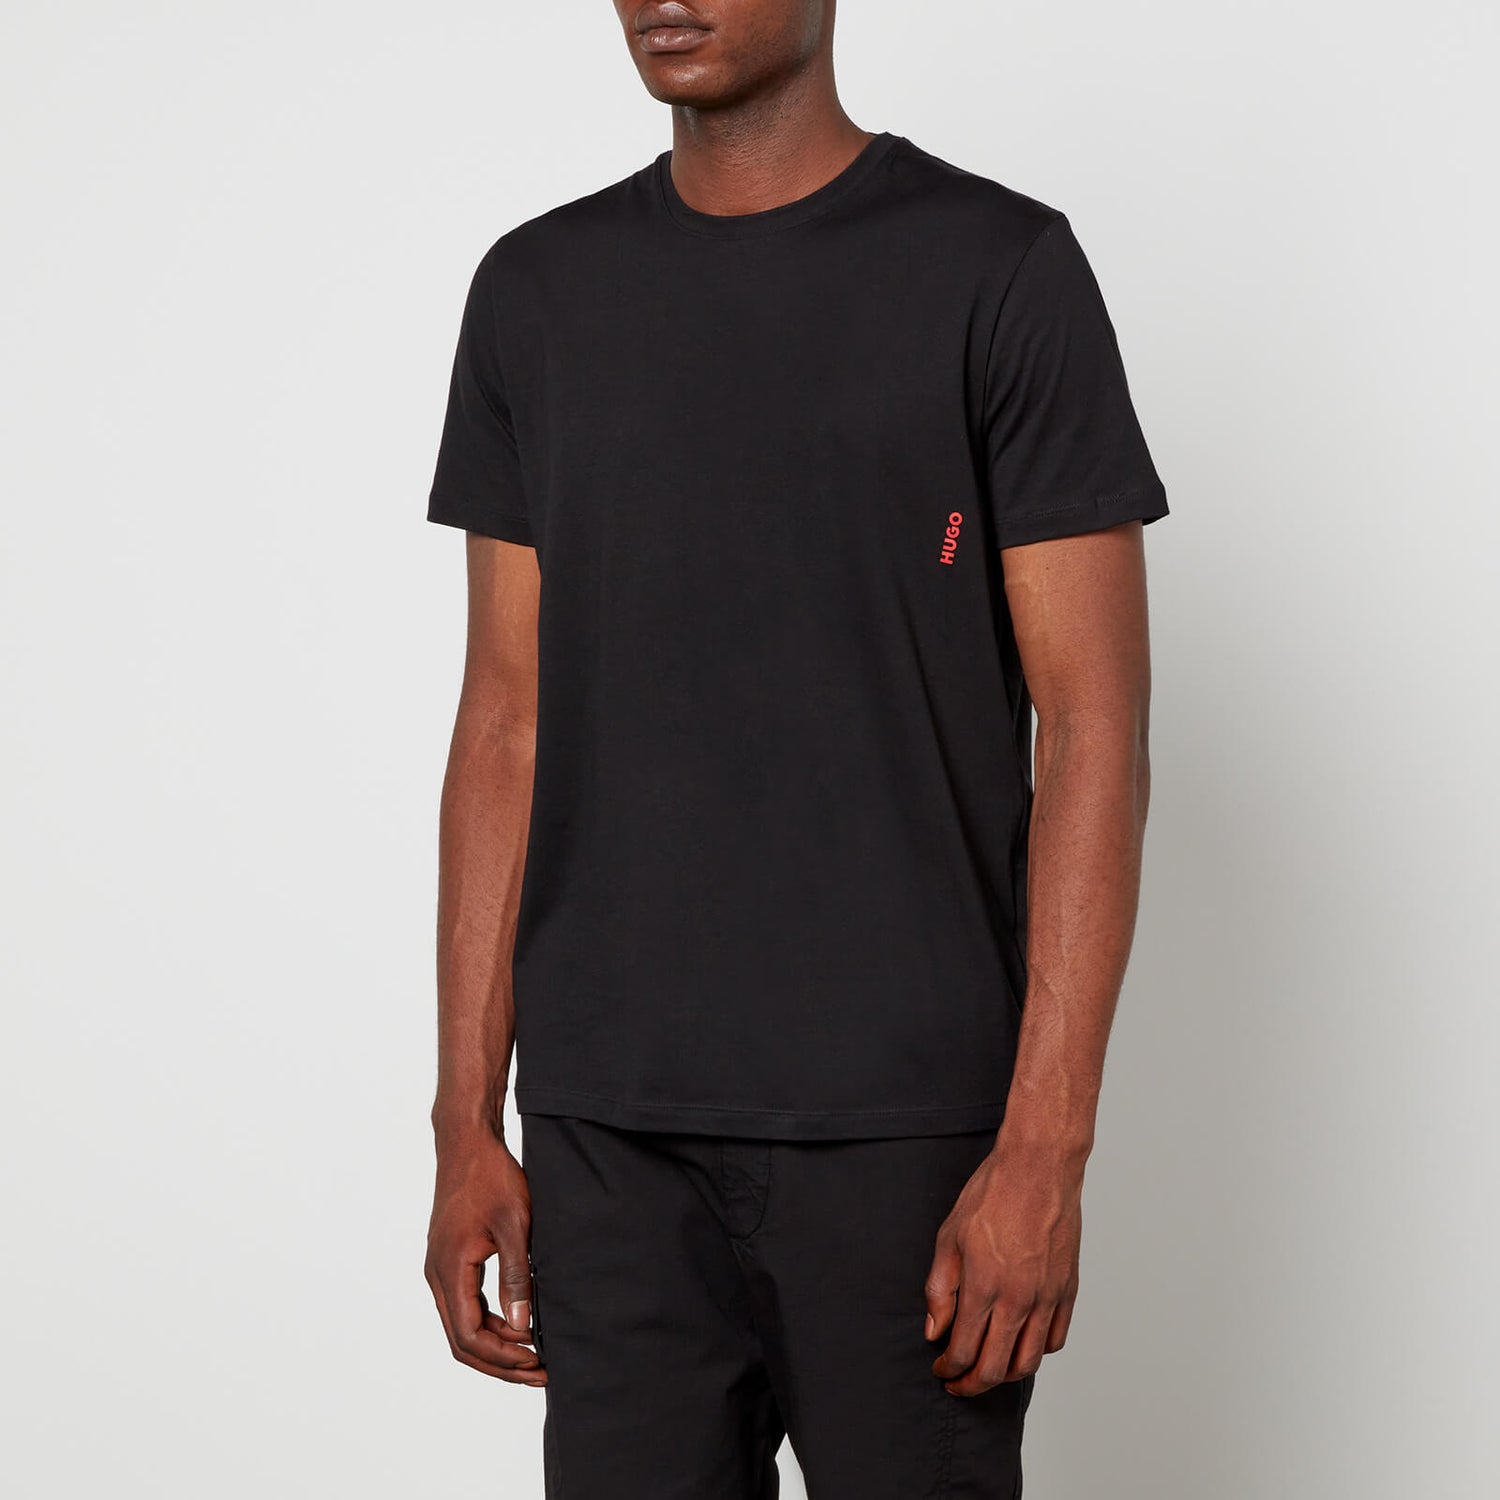 HUGO Bodywear Men's 2-Pack T-Shirts - Black - S